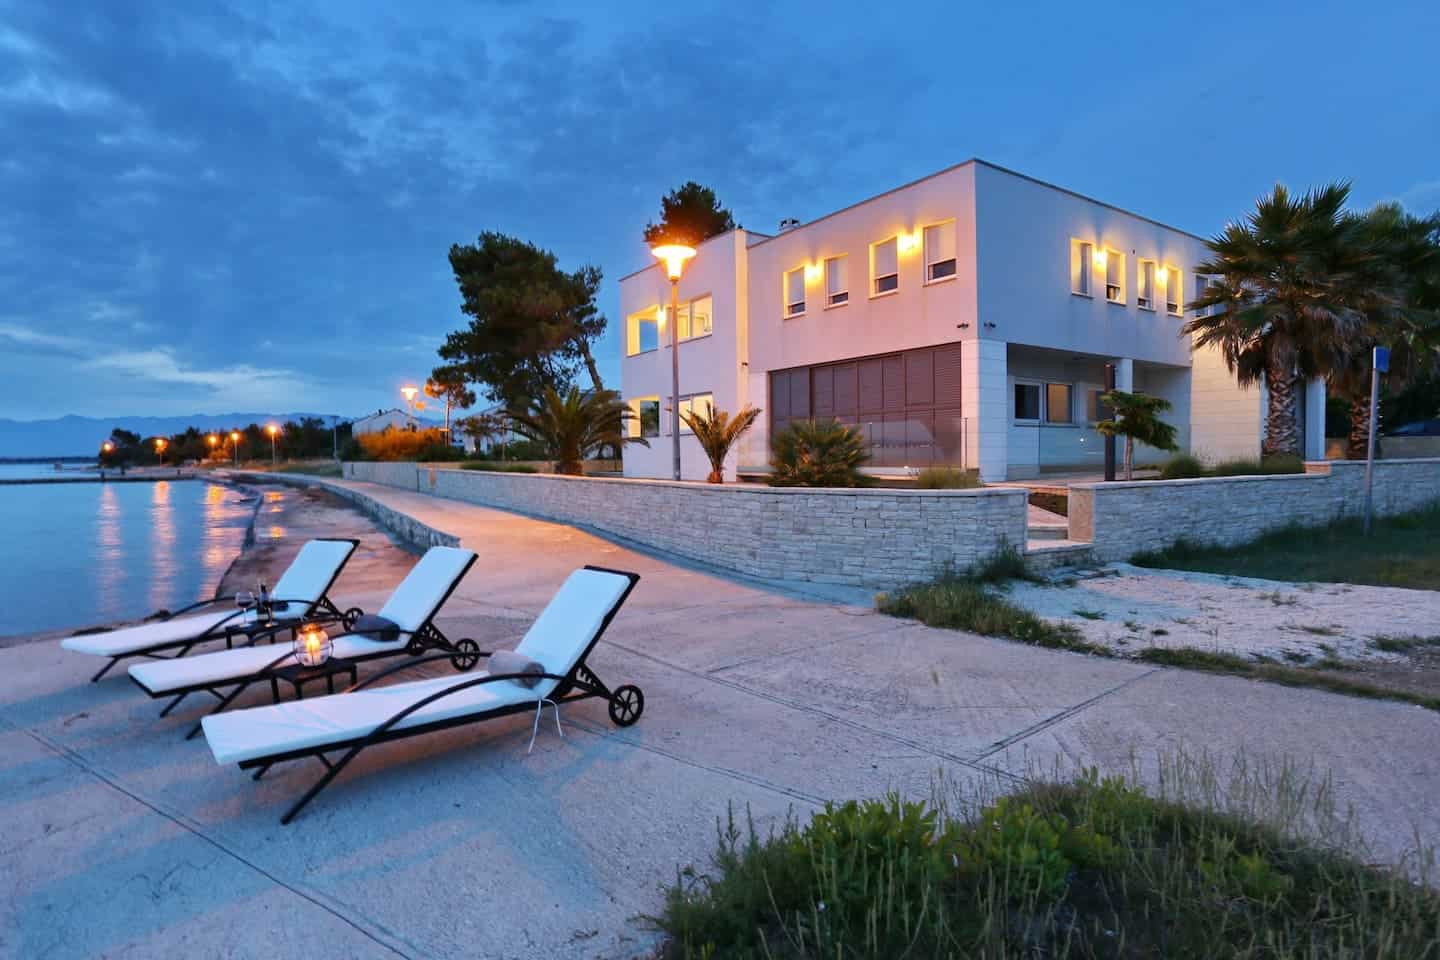 Image of Airbnb rental in Croatia